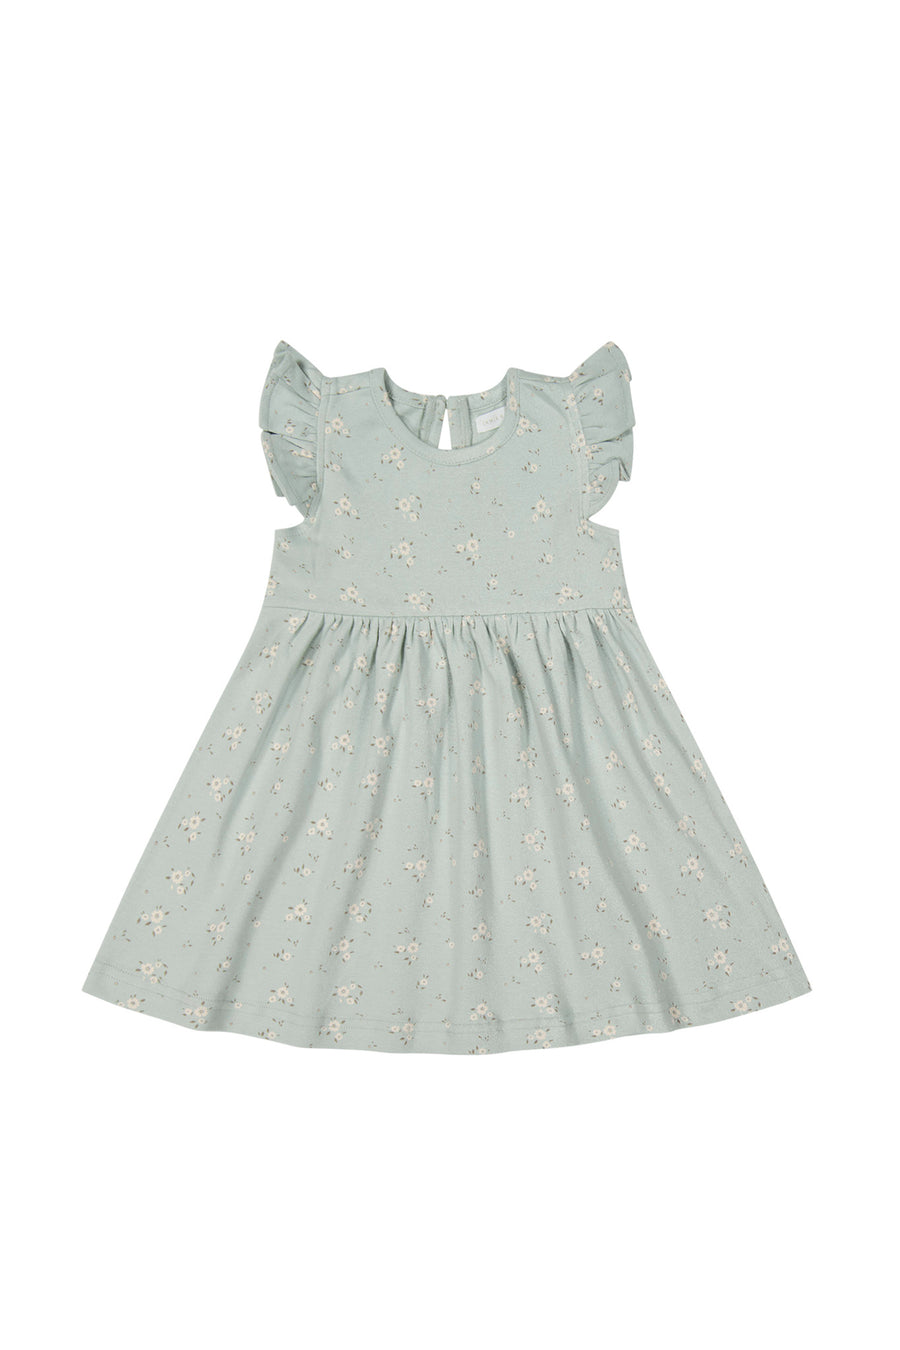 Organic Cotton Ada Dress - Lulu Blue Childrens Dress from Jamie Kay NZ